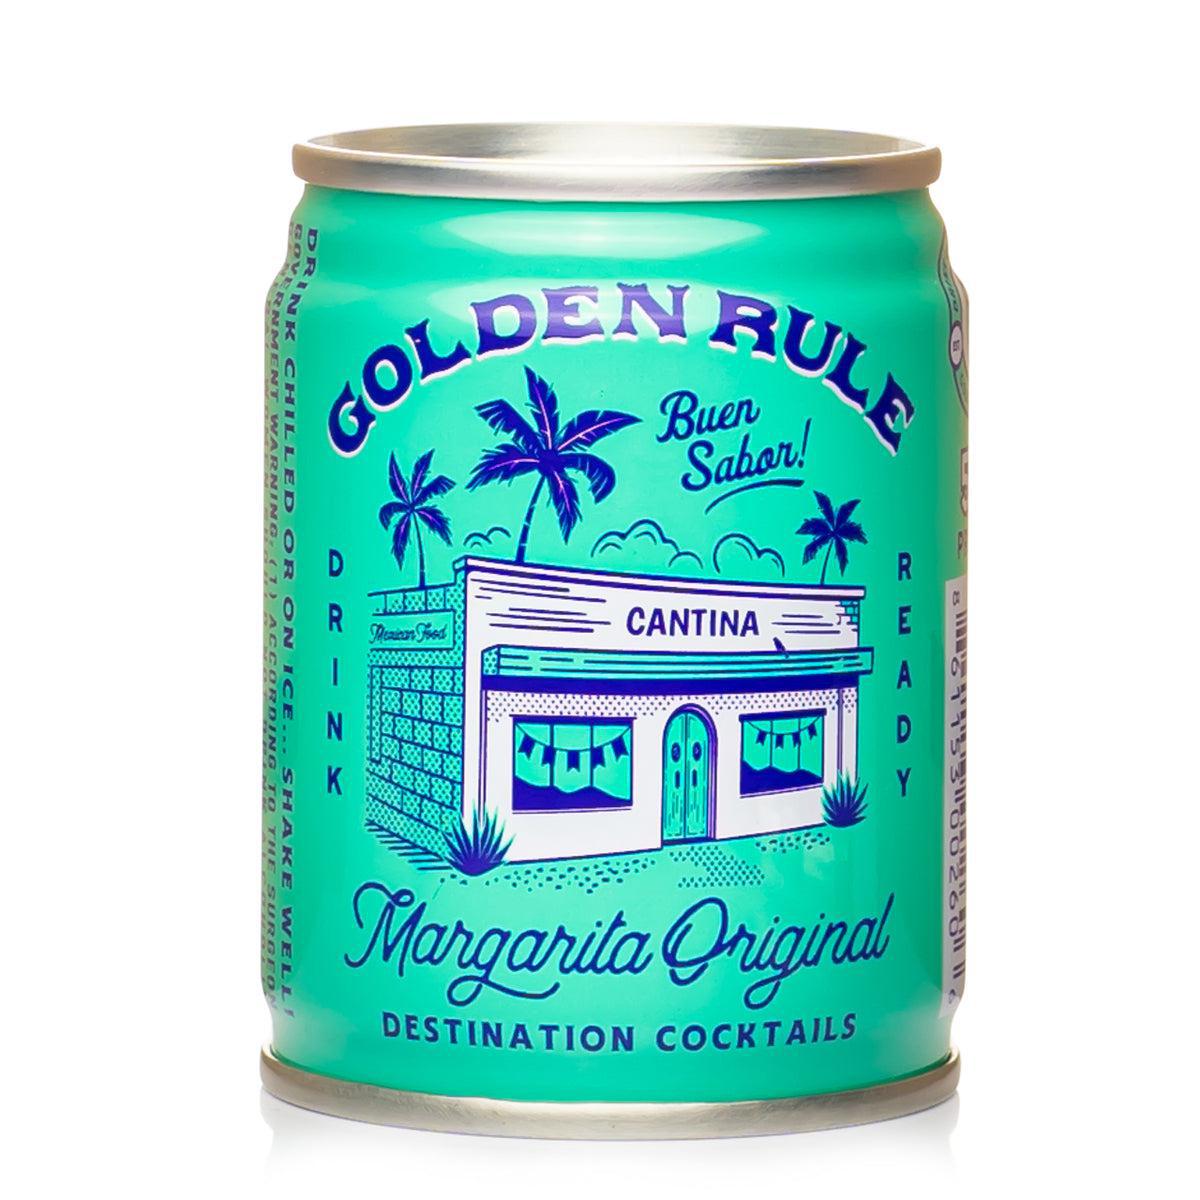 Golden Rule - Margarita Original (100ML) - The Epicurean Trader